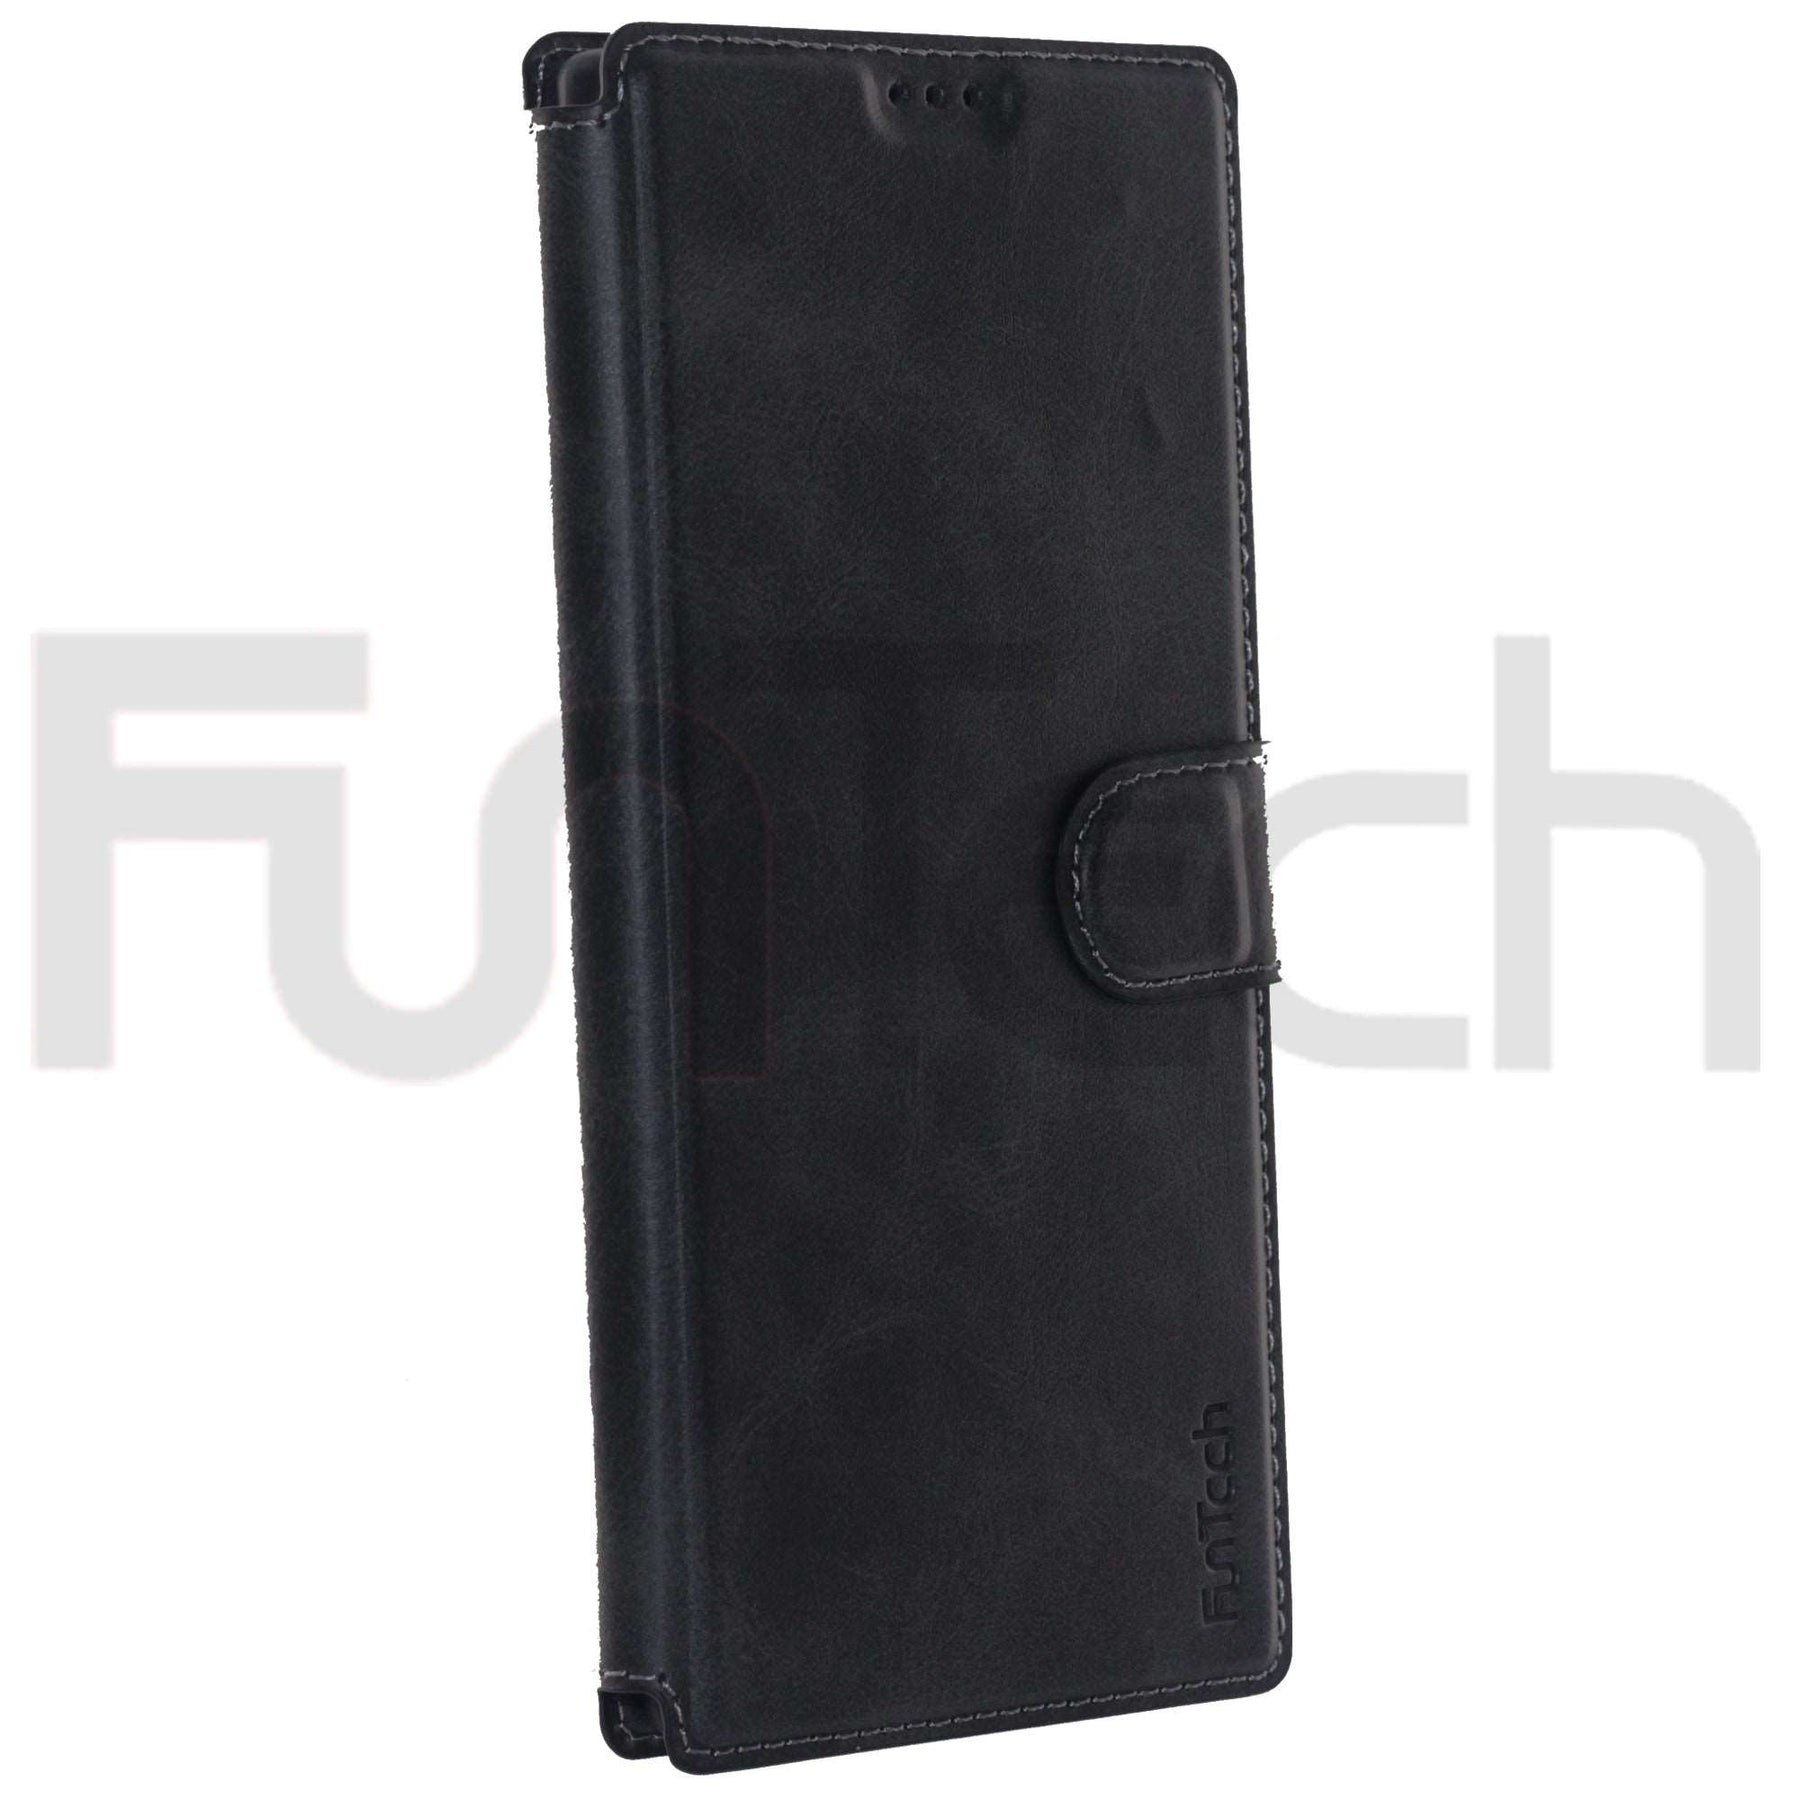 Samsung Note 10 Plus, Leather Wallet Case, Color Black.